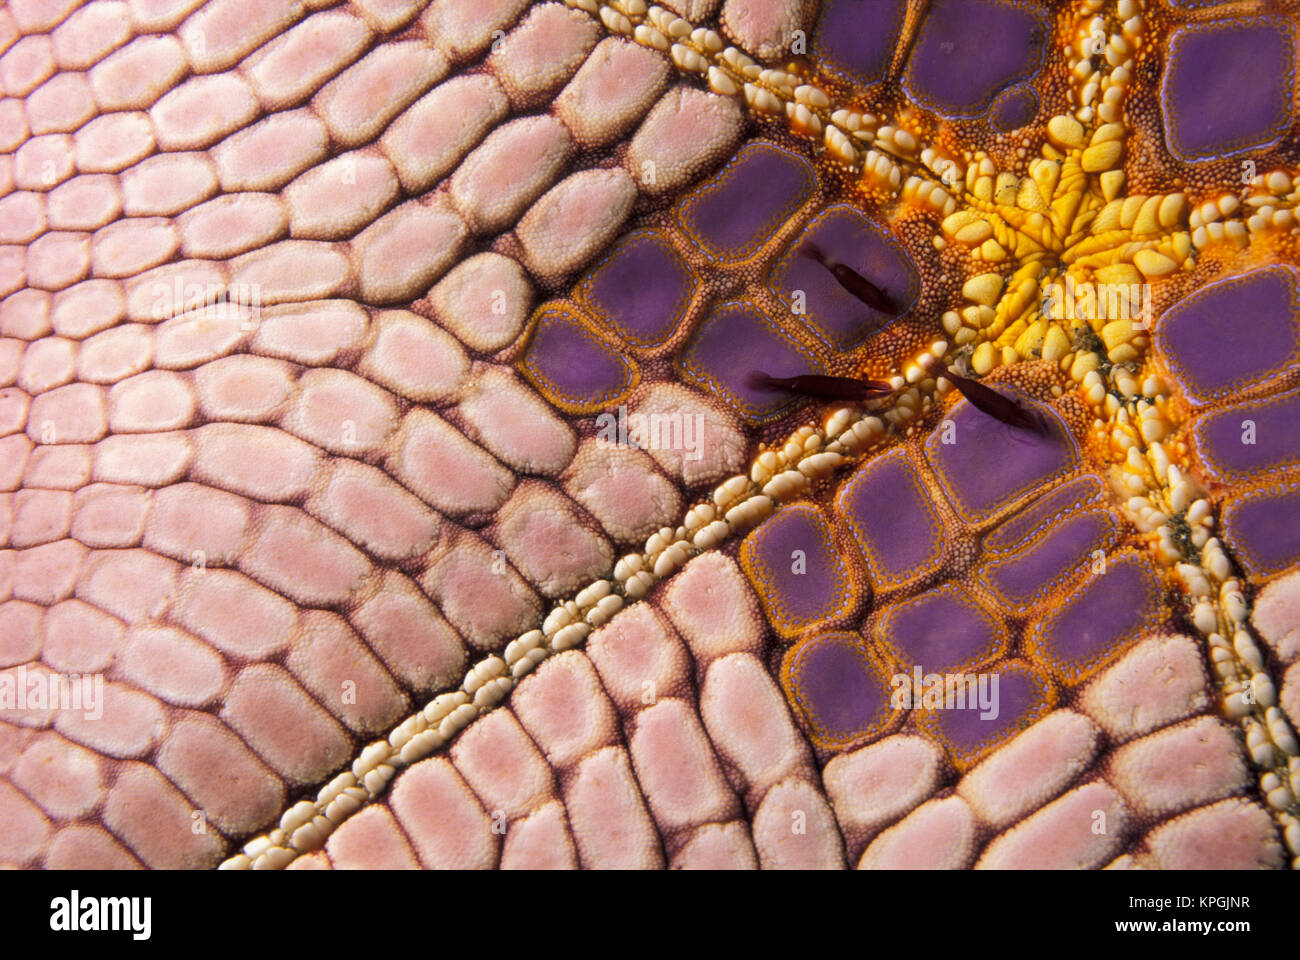 Indonesia. Shrimp (Periclimenes soror) on Cushion Star (Culcita novaGuineae) Stock Photo